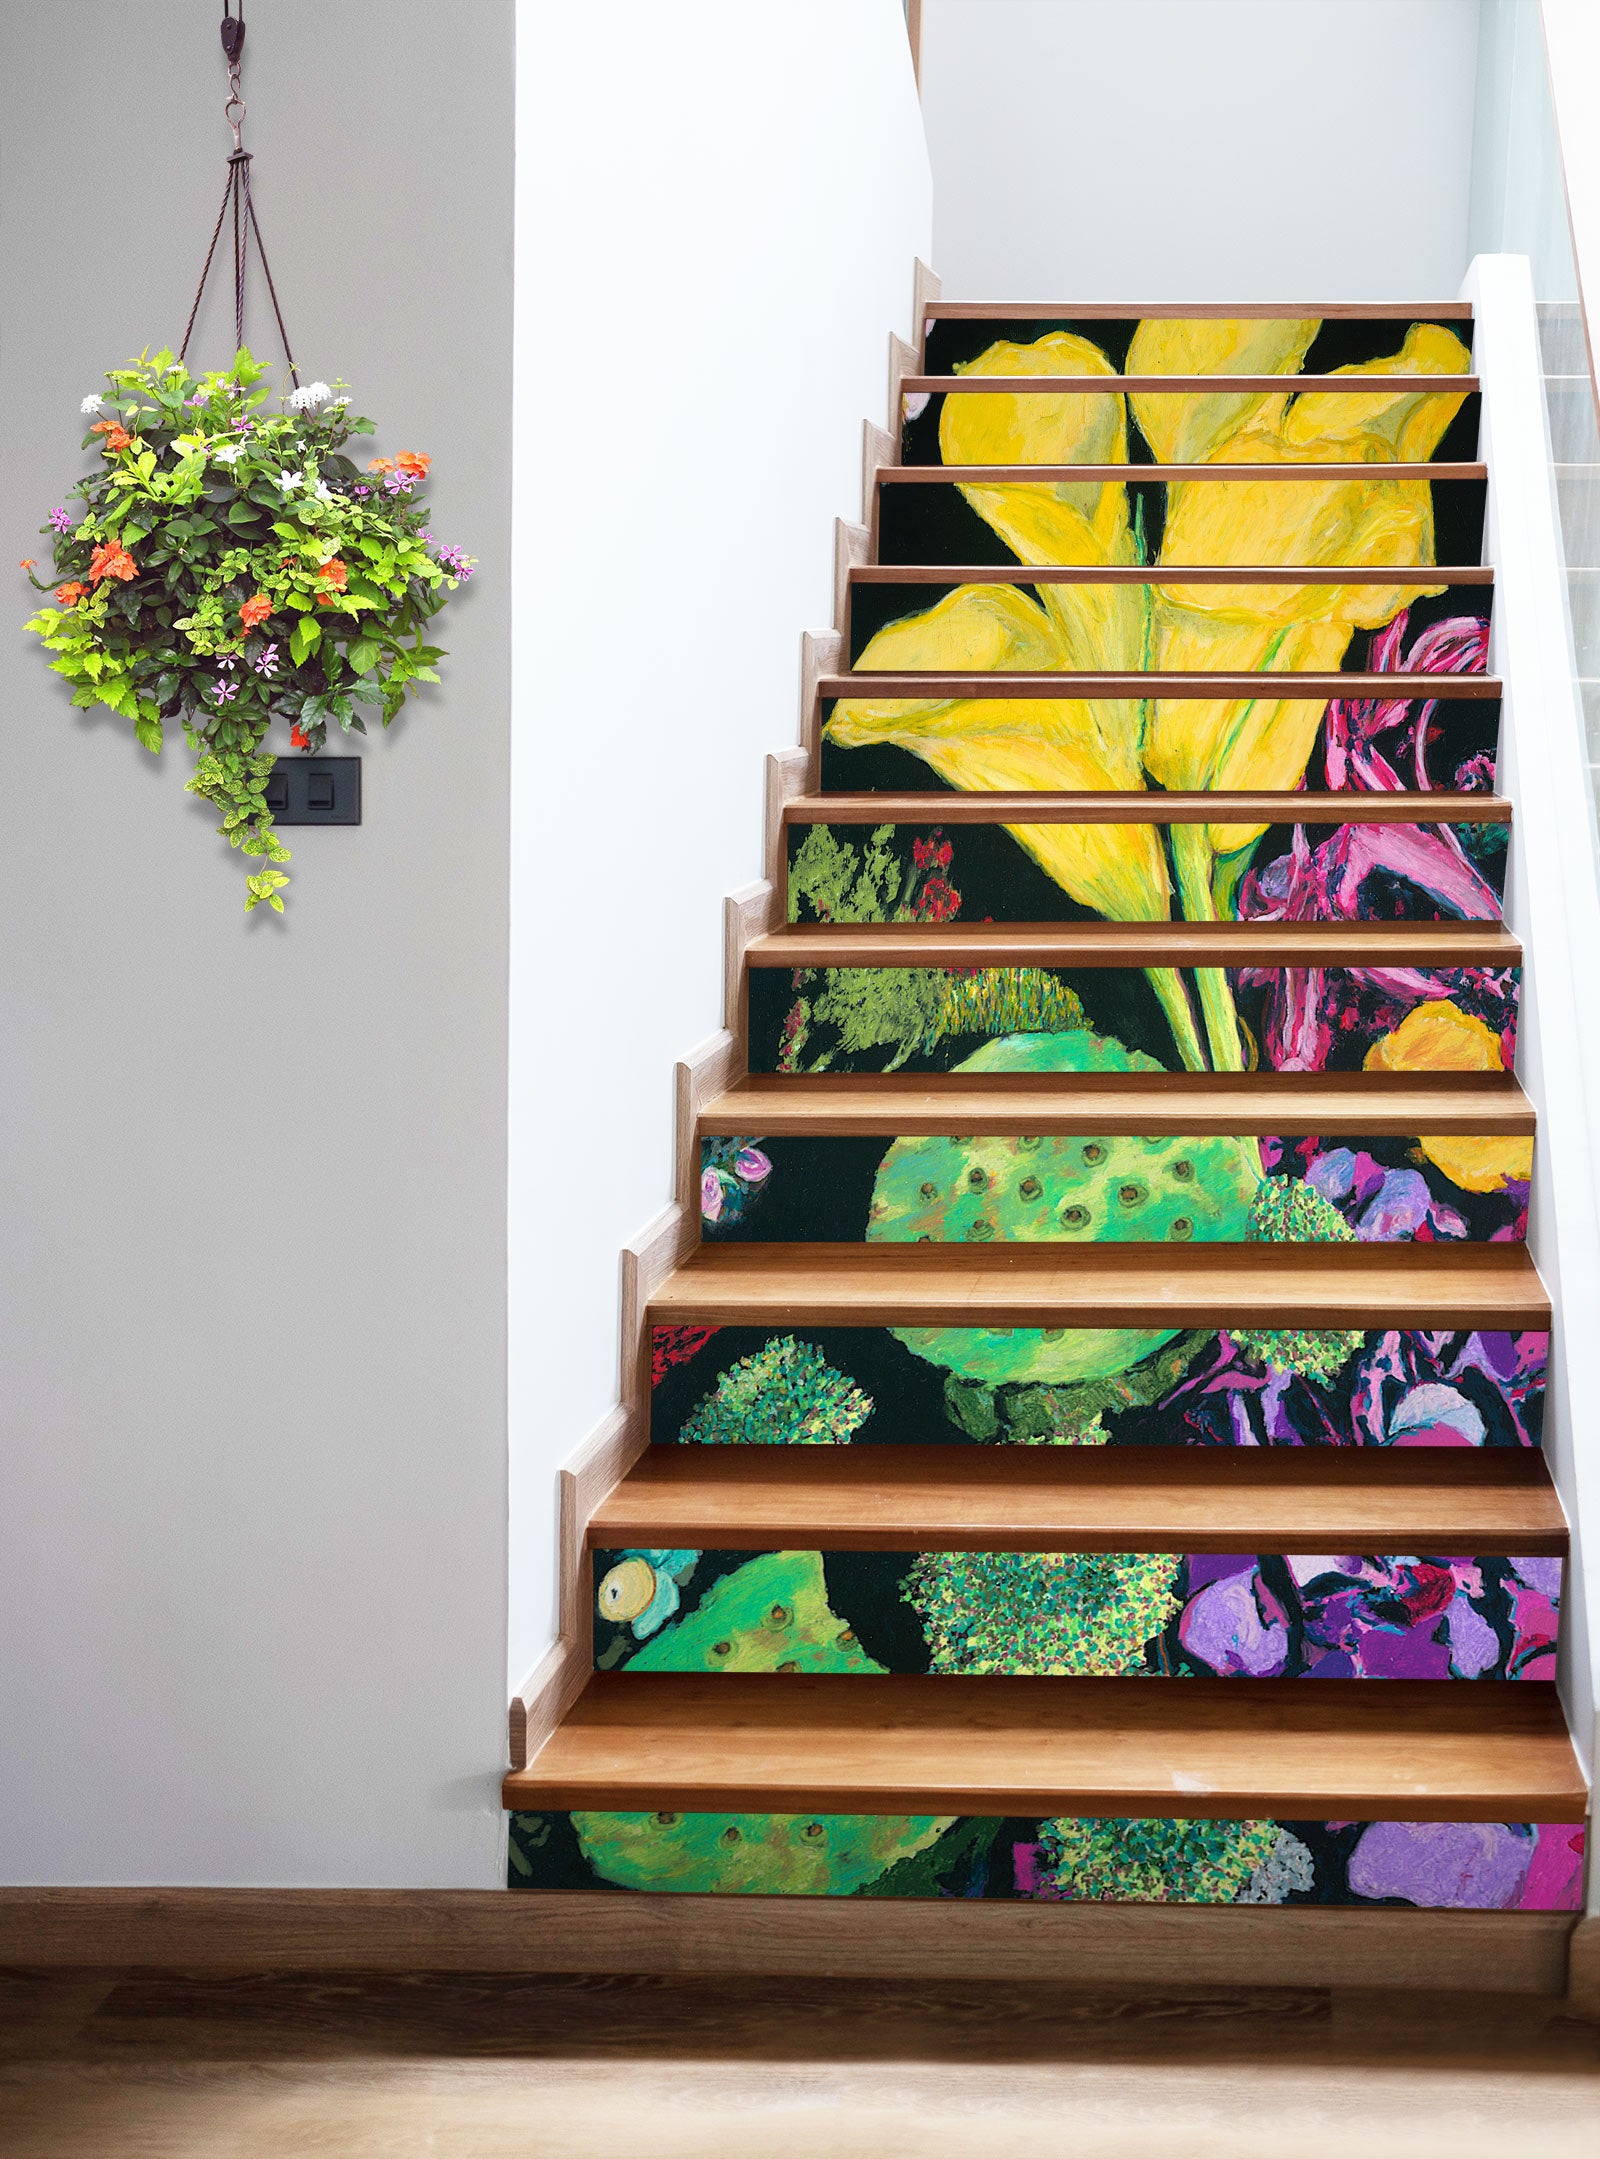 3D Yellow Flower Cactus 90152 Allan P. Friedlander Stair Risers